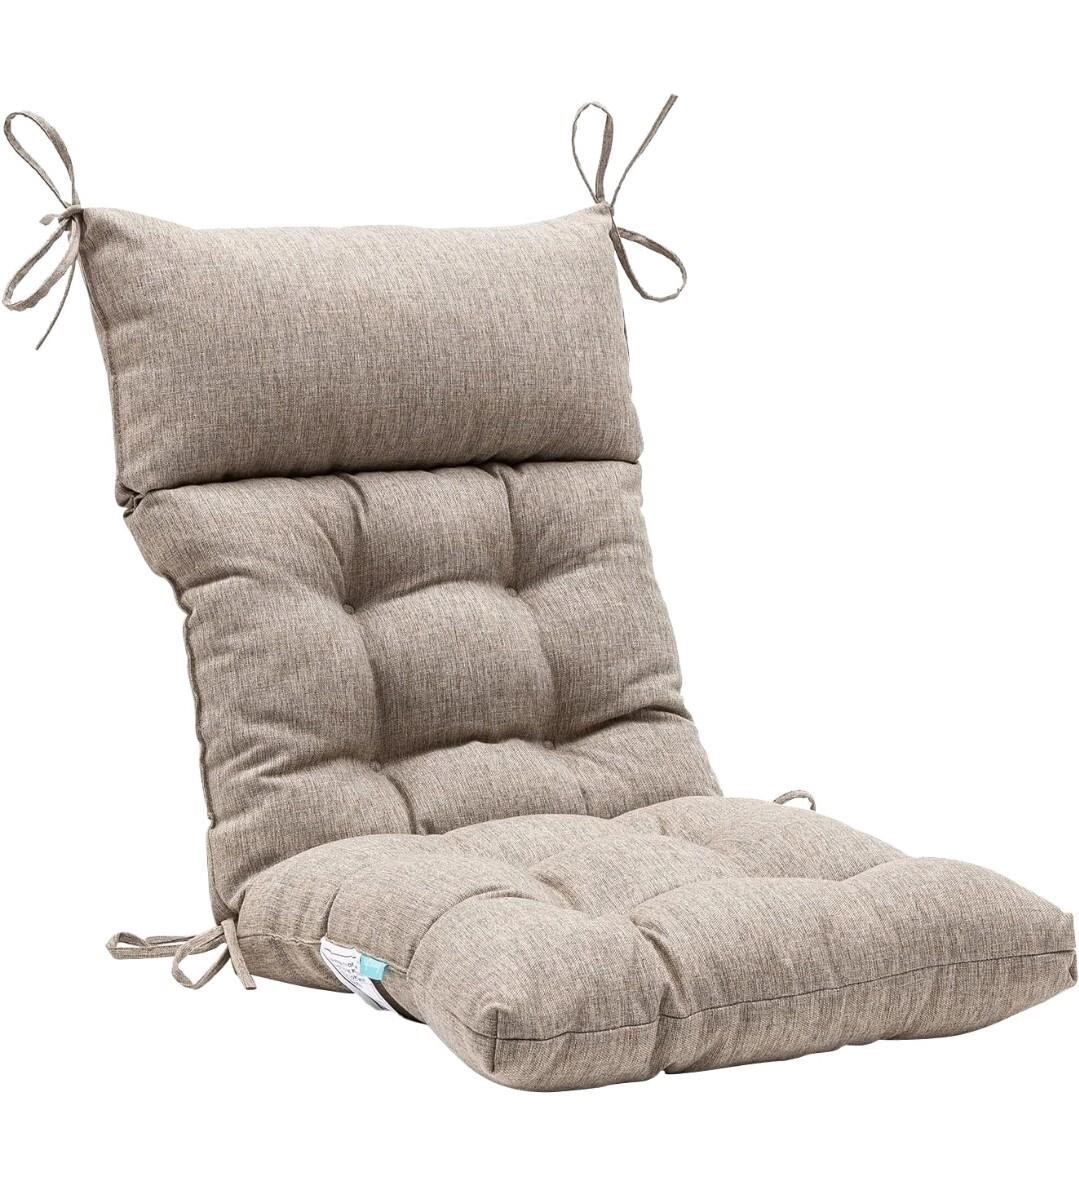 QILLOWAY Indoor/Outdoor High Back Chair Cushion